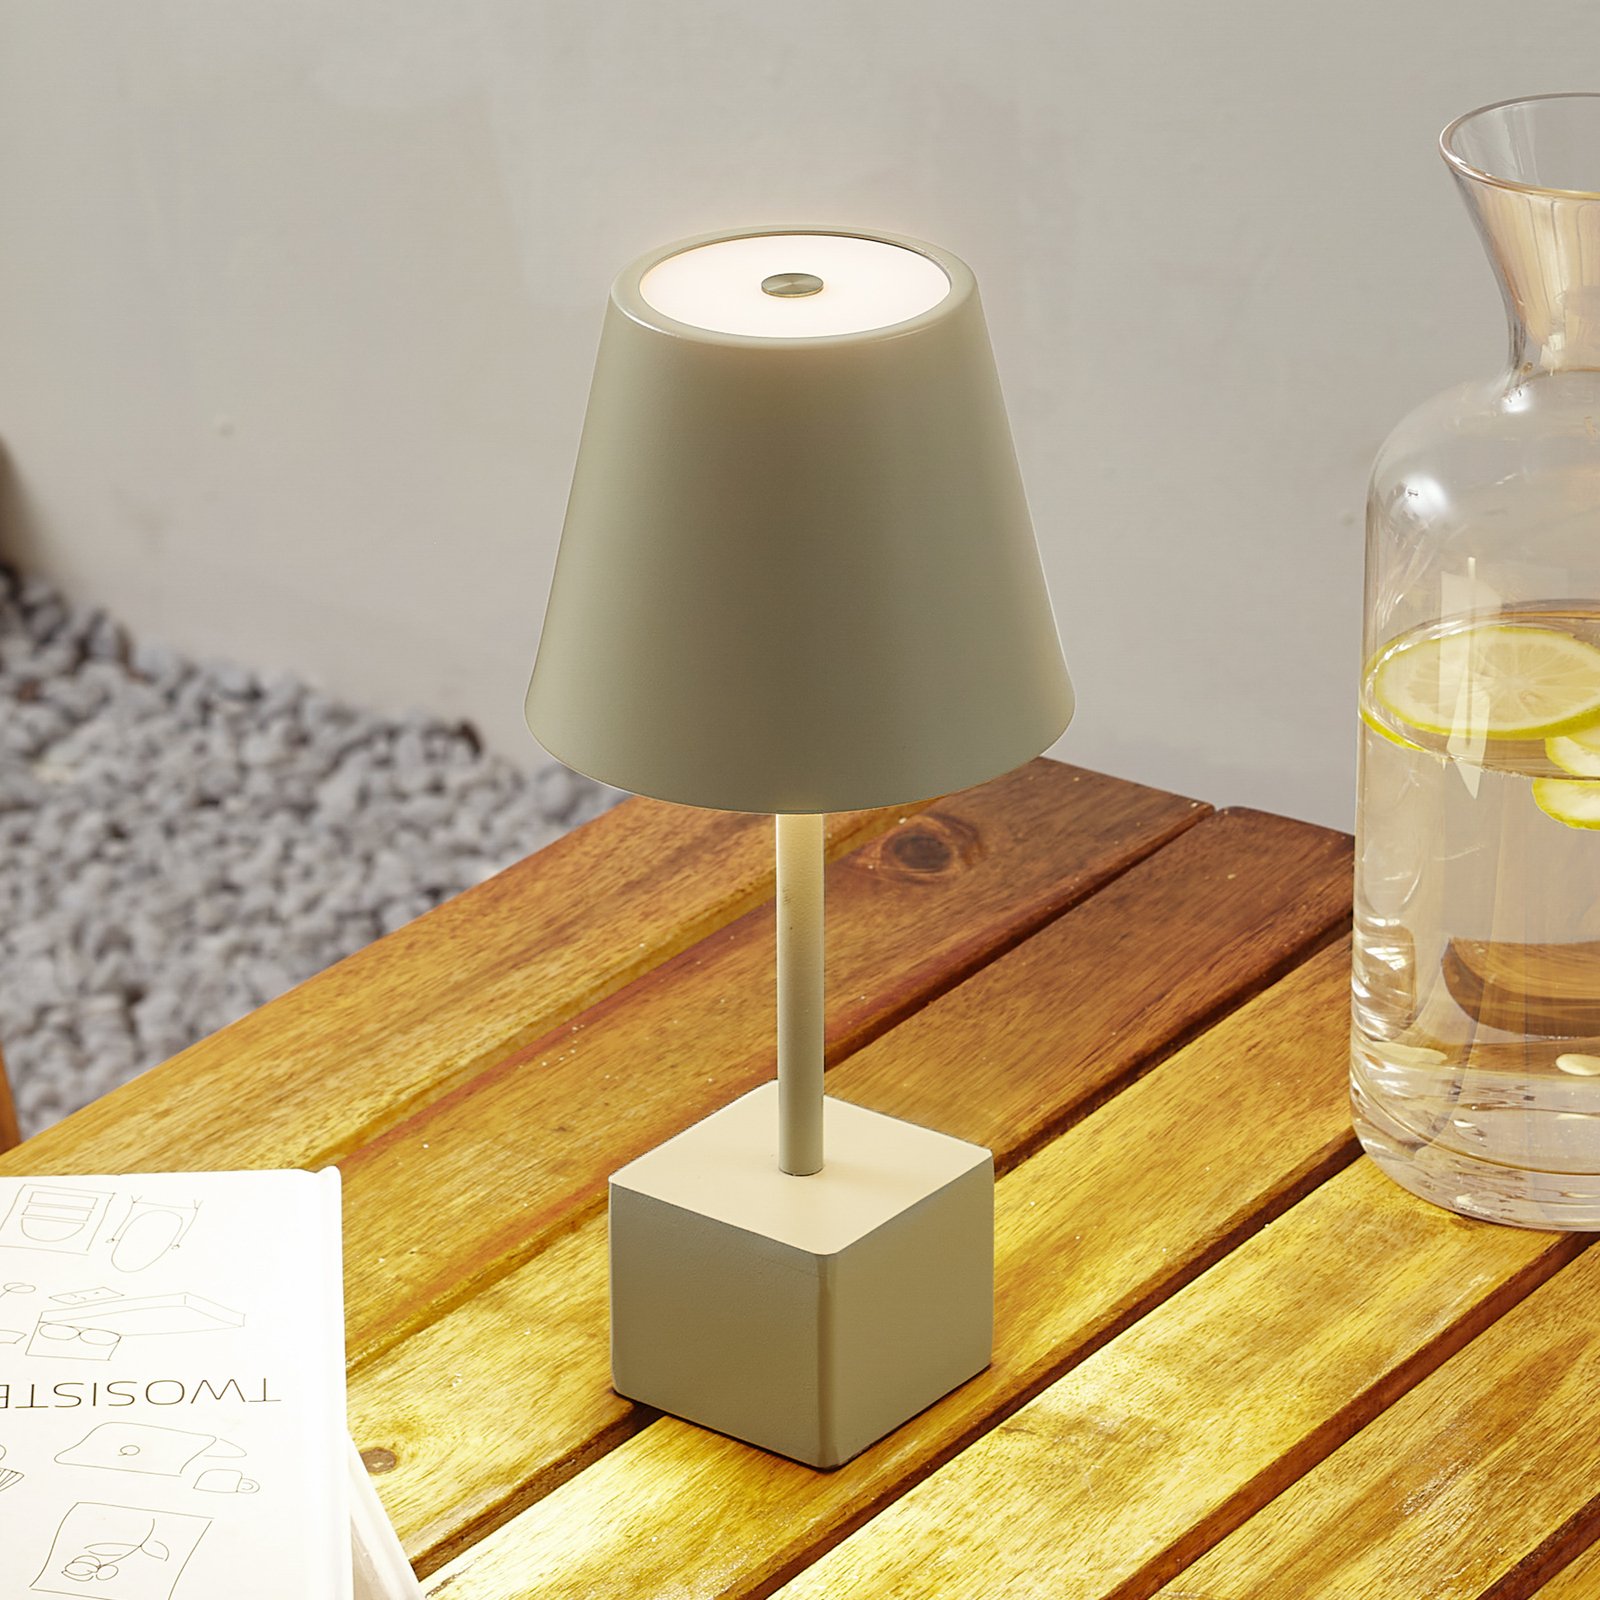 Lindby LED genopladelig bordlampe Janea, kube, grøn, metal